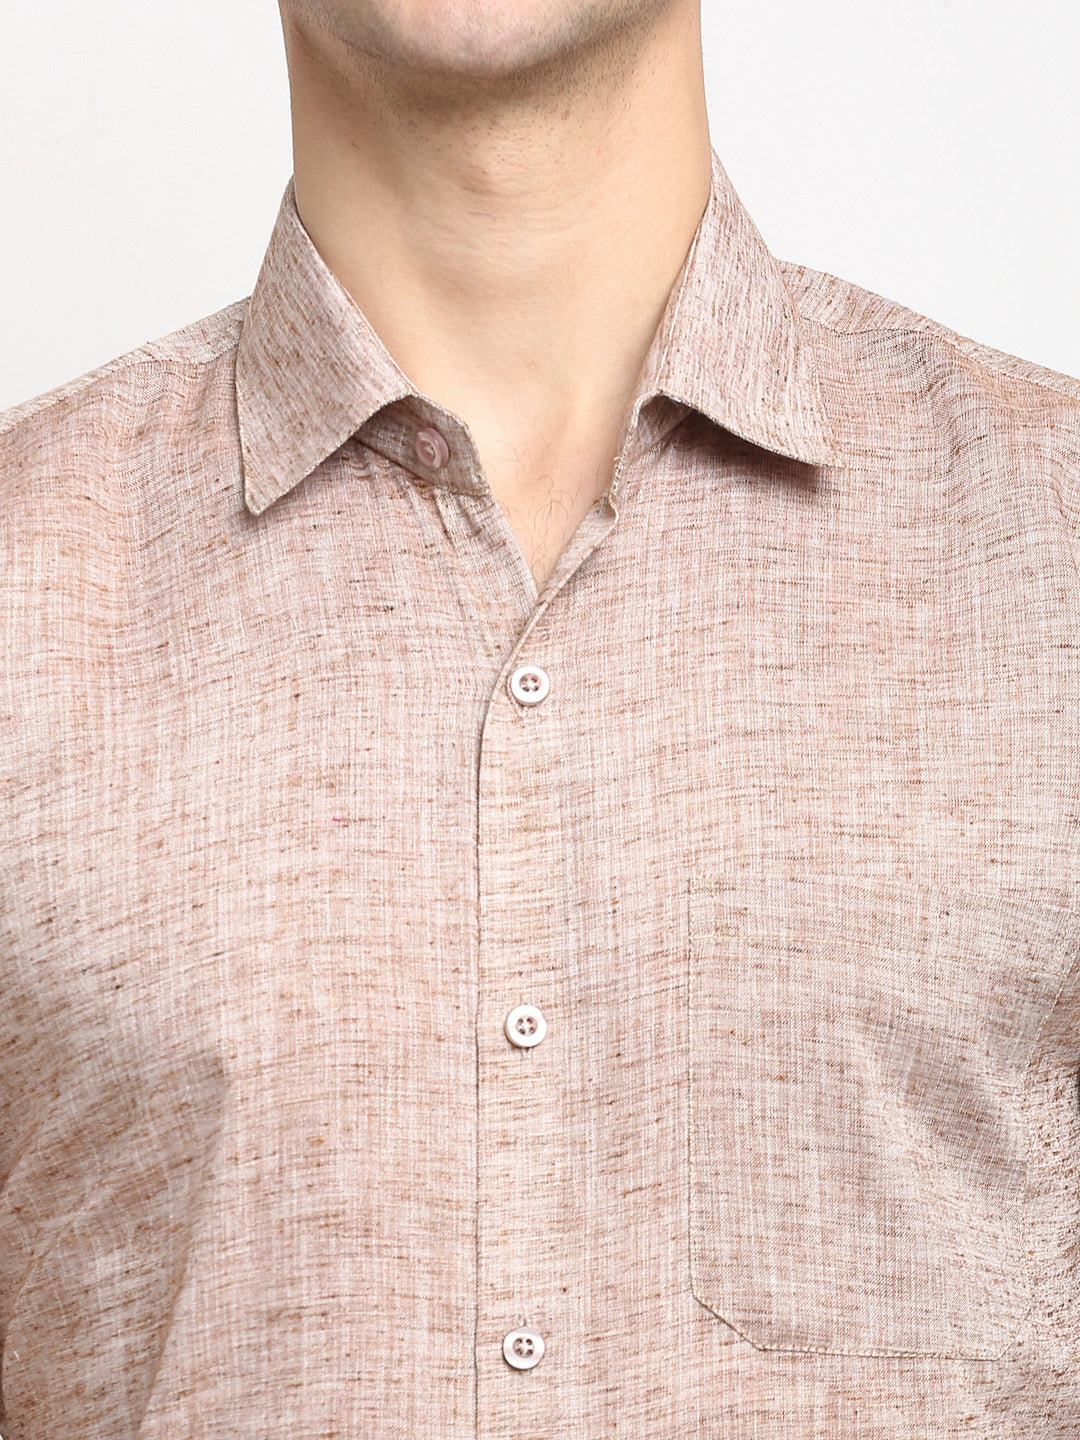 Men's Rust Solid Cotton Half Sleeves Formal Shirt ( SF 783Rust ) - Jainish